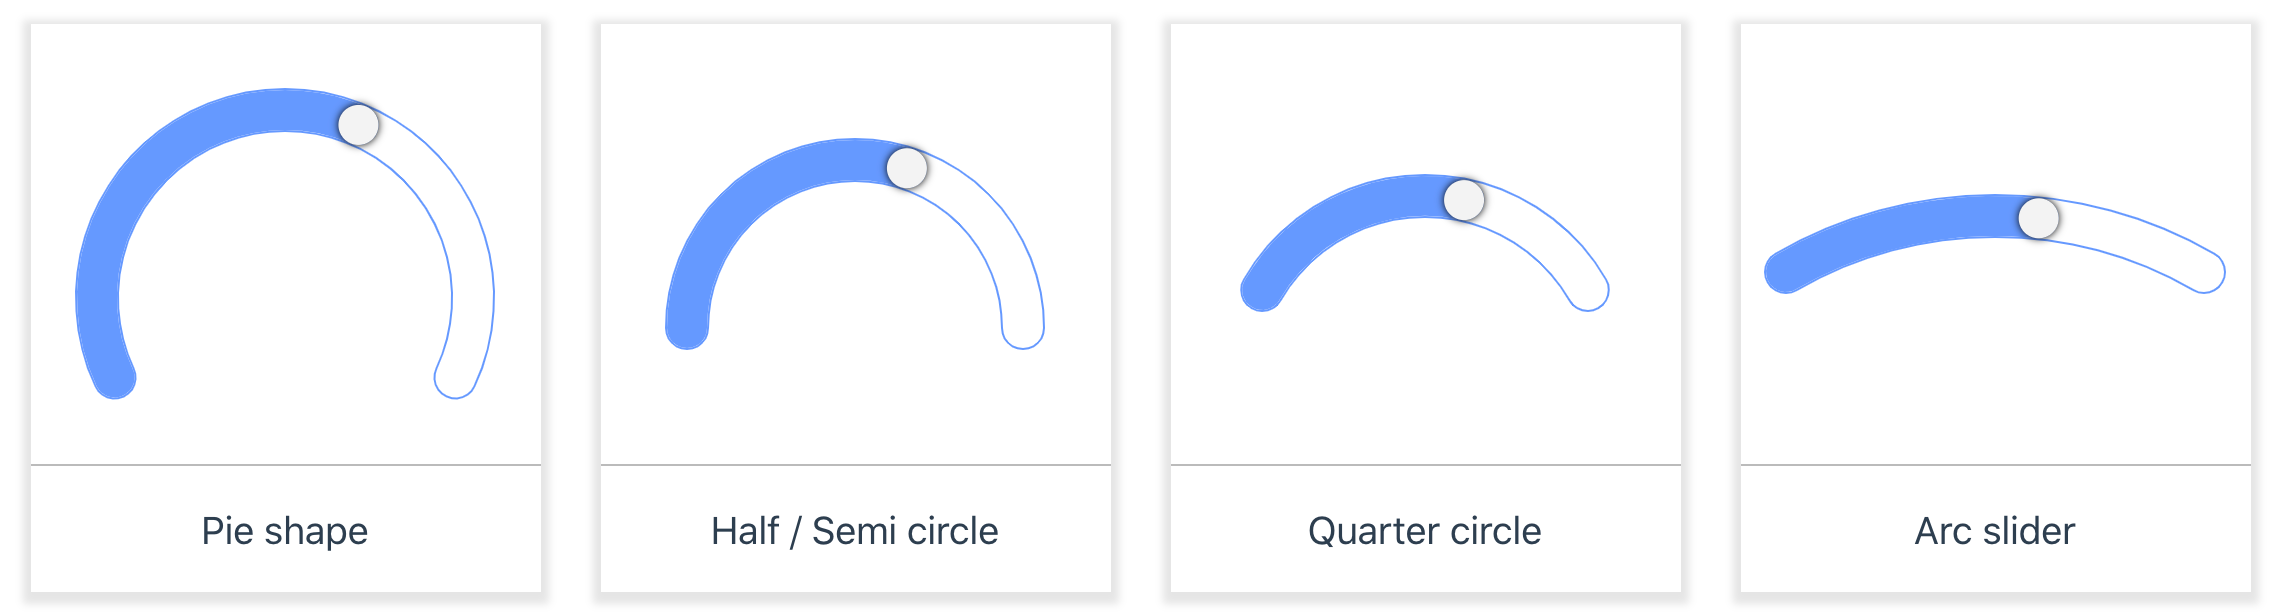 @artem9989/vue-three-round-slider - different circle shapes - pie shape, half or semi-circle, quarter and arc slider